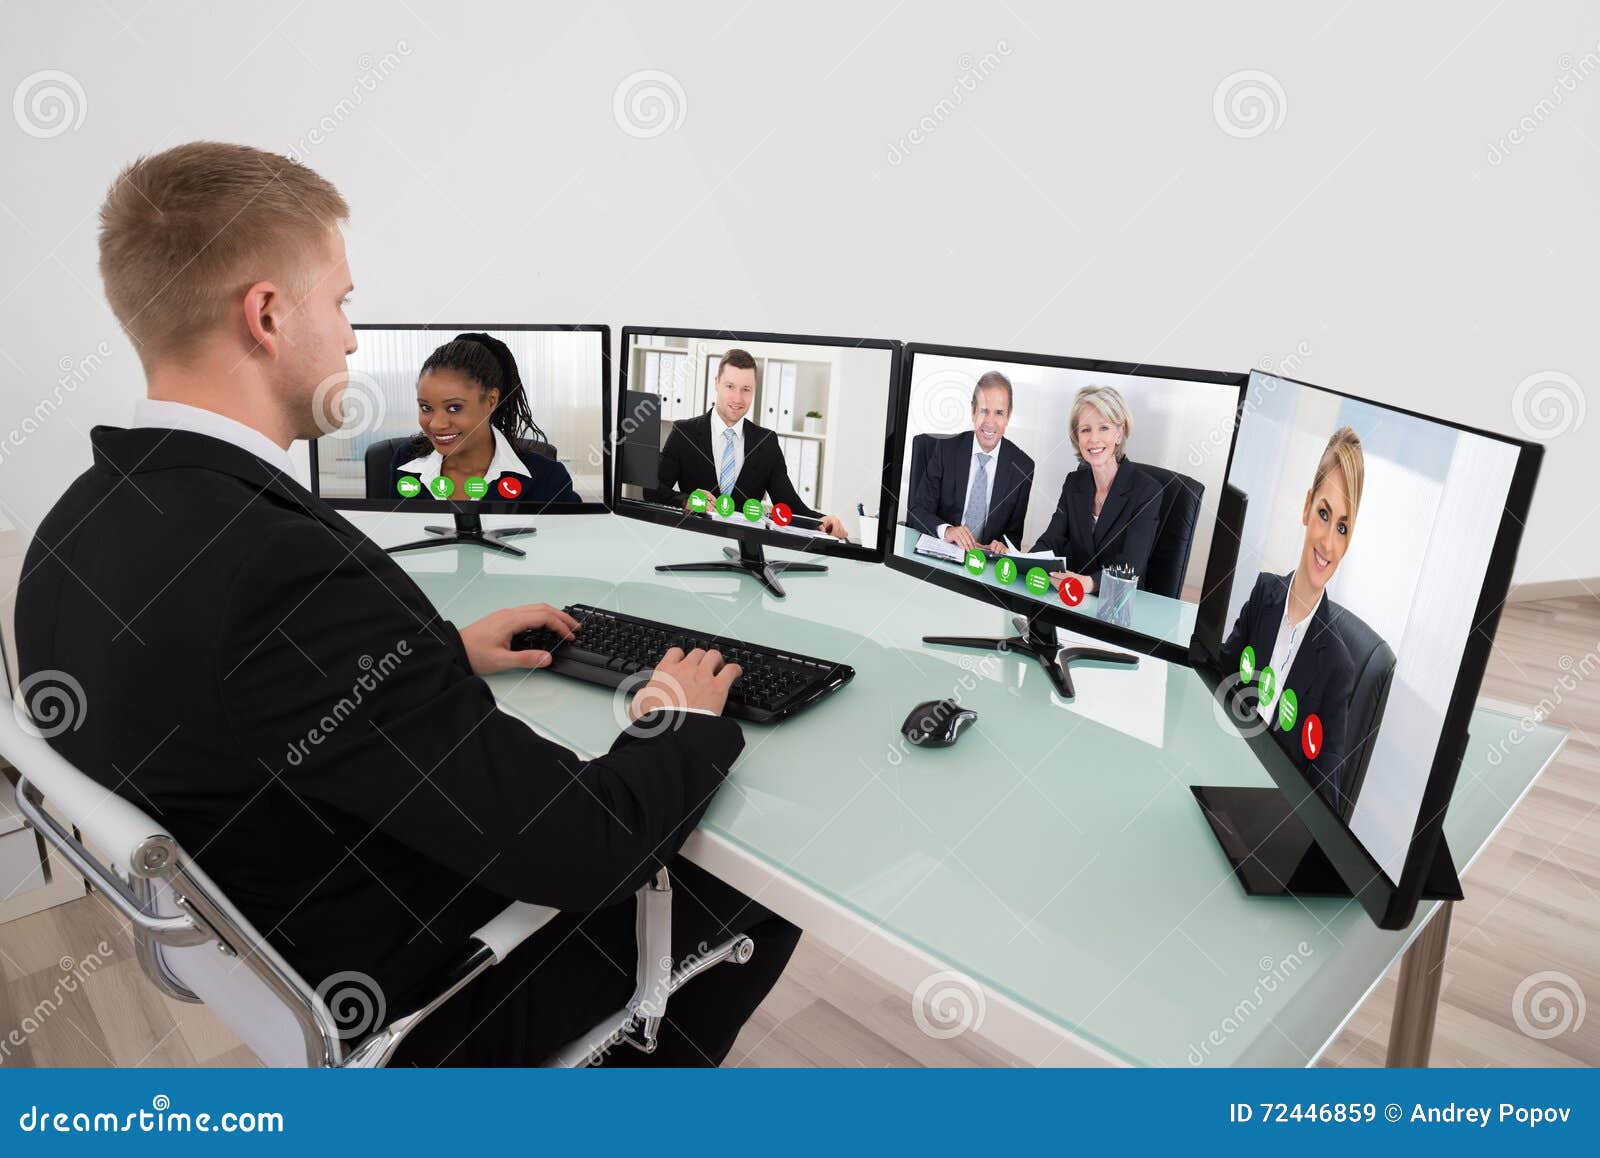 Businessman Video Conferencing On Desk Stock Image Image Of Meet